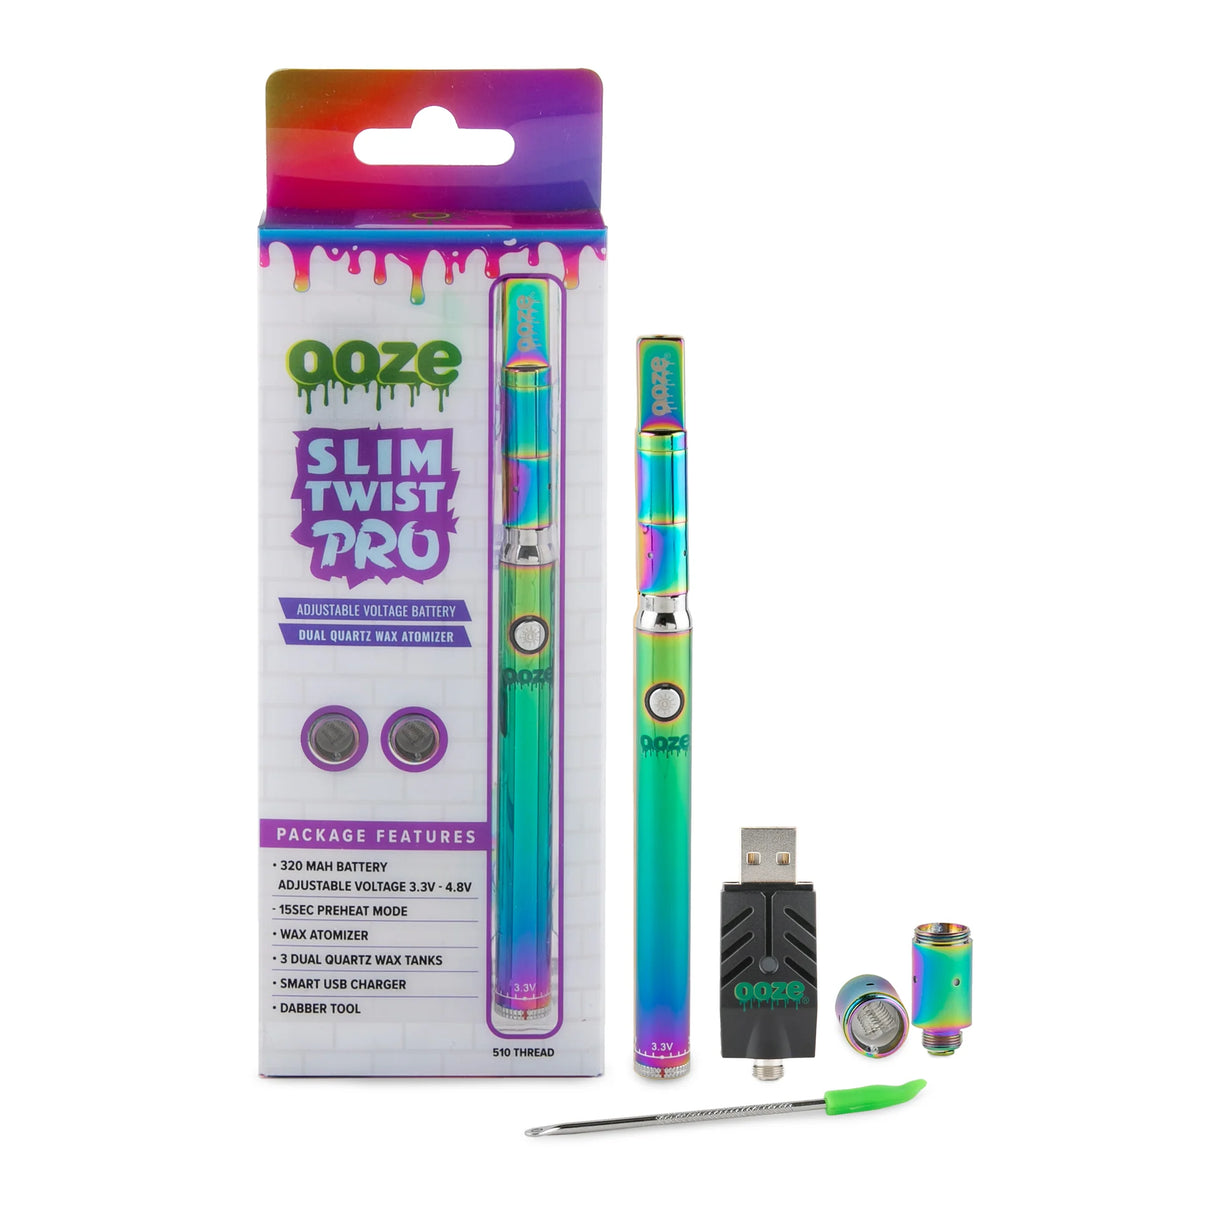 Ooze Slim Twist Pro 320mAh Wax Pen - Rainbow